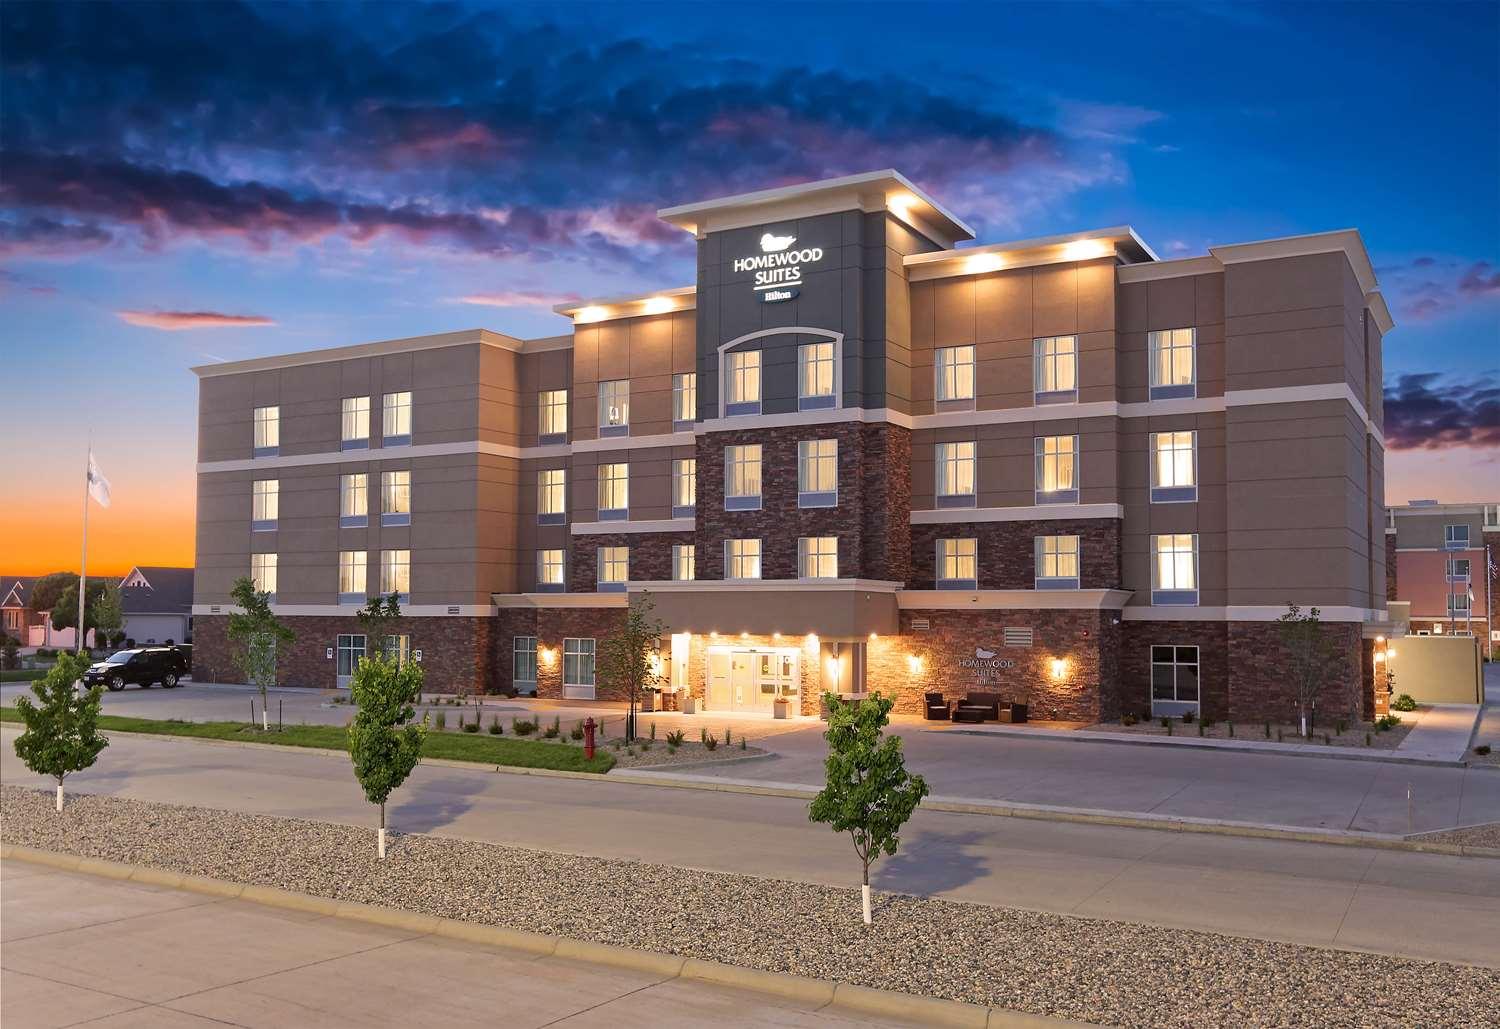 Homewood Suites by Hilton West Fargo Sanford Medical Center Area in West Fargo, ND